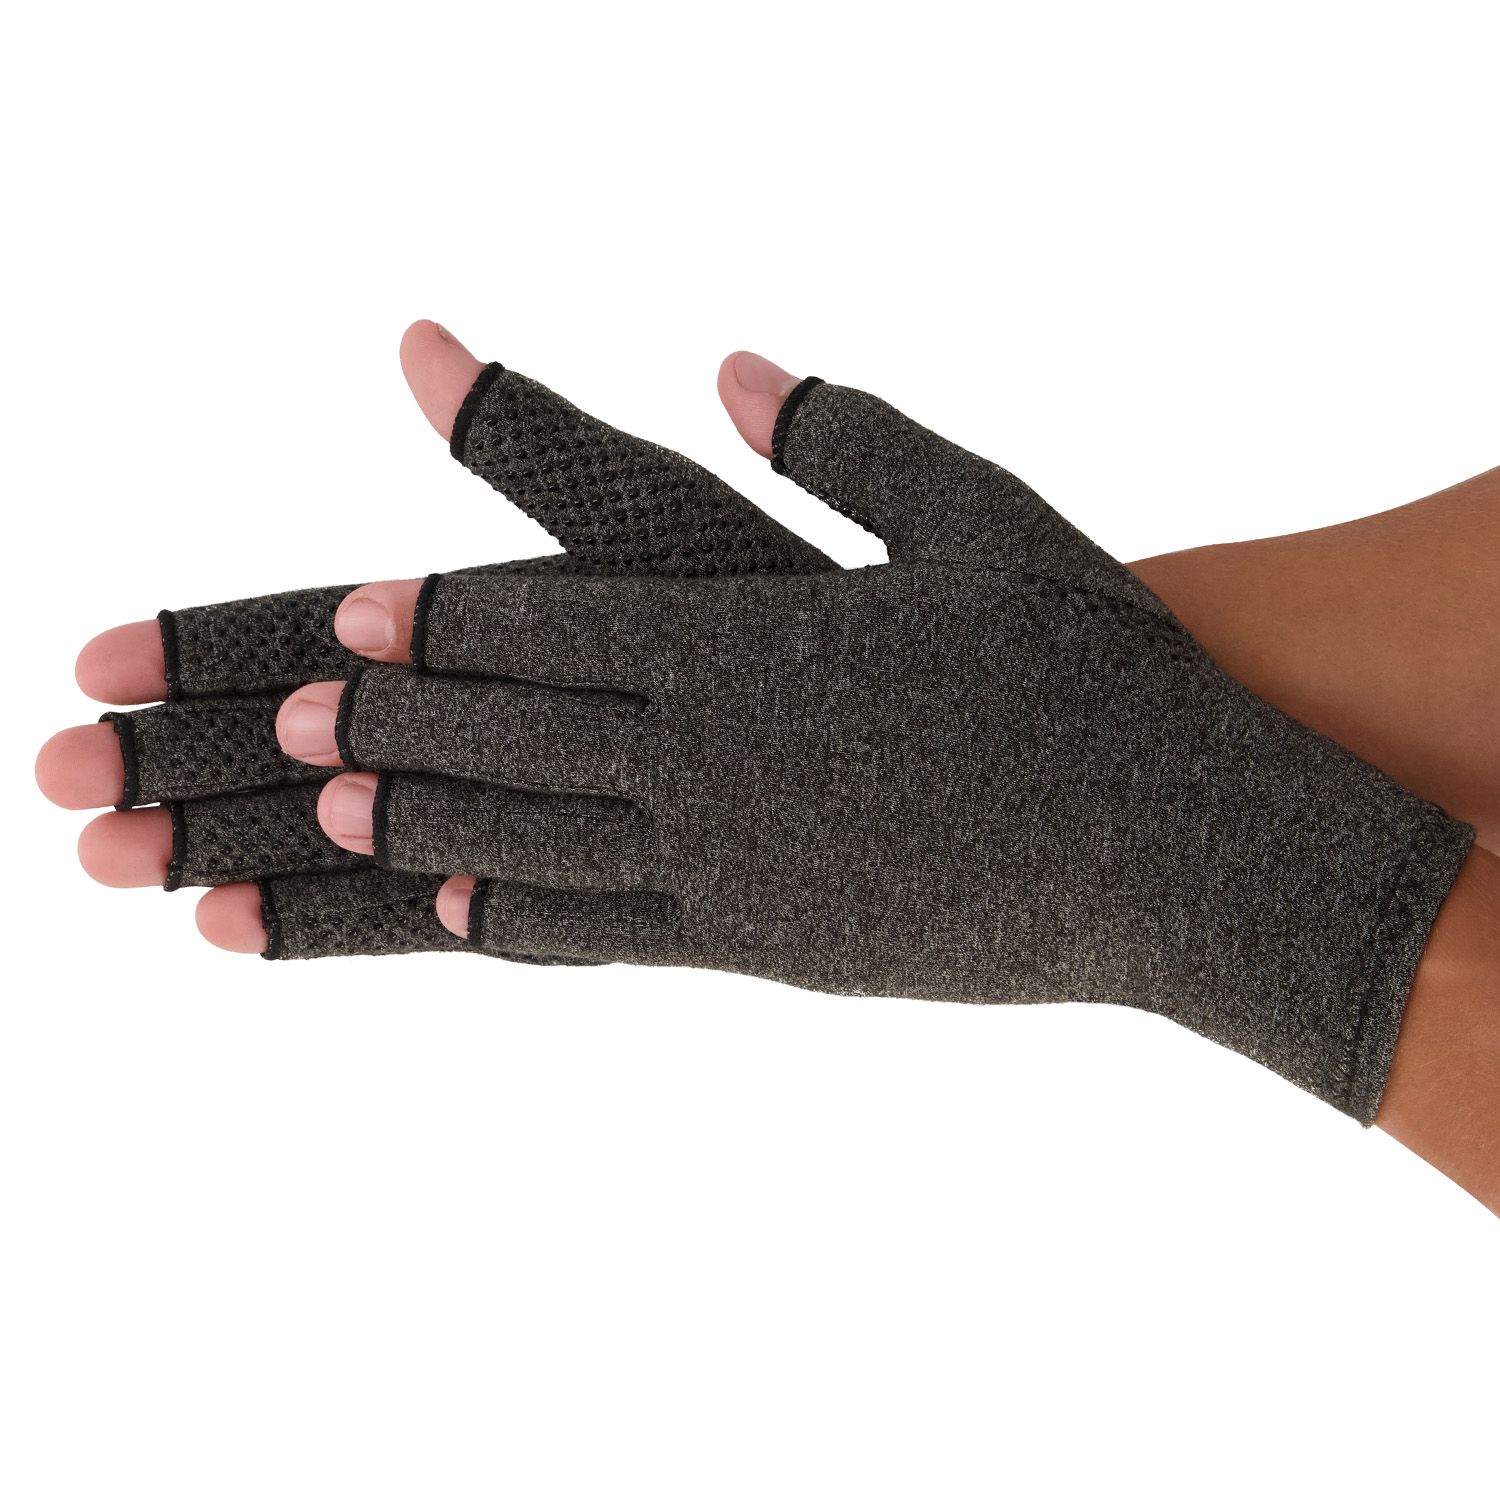 medidu rheumatoid arthritis osteoarthritis gloves with anti-slip layer in skin colour